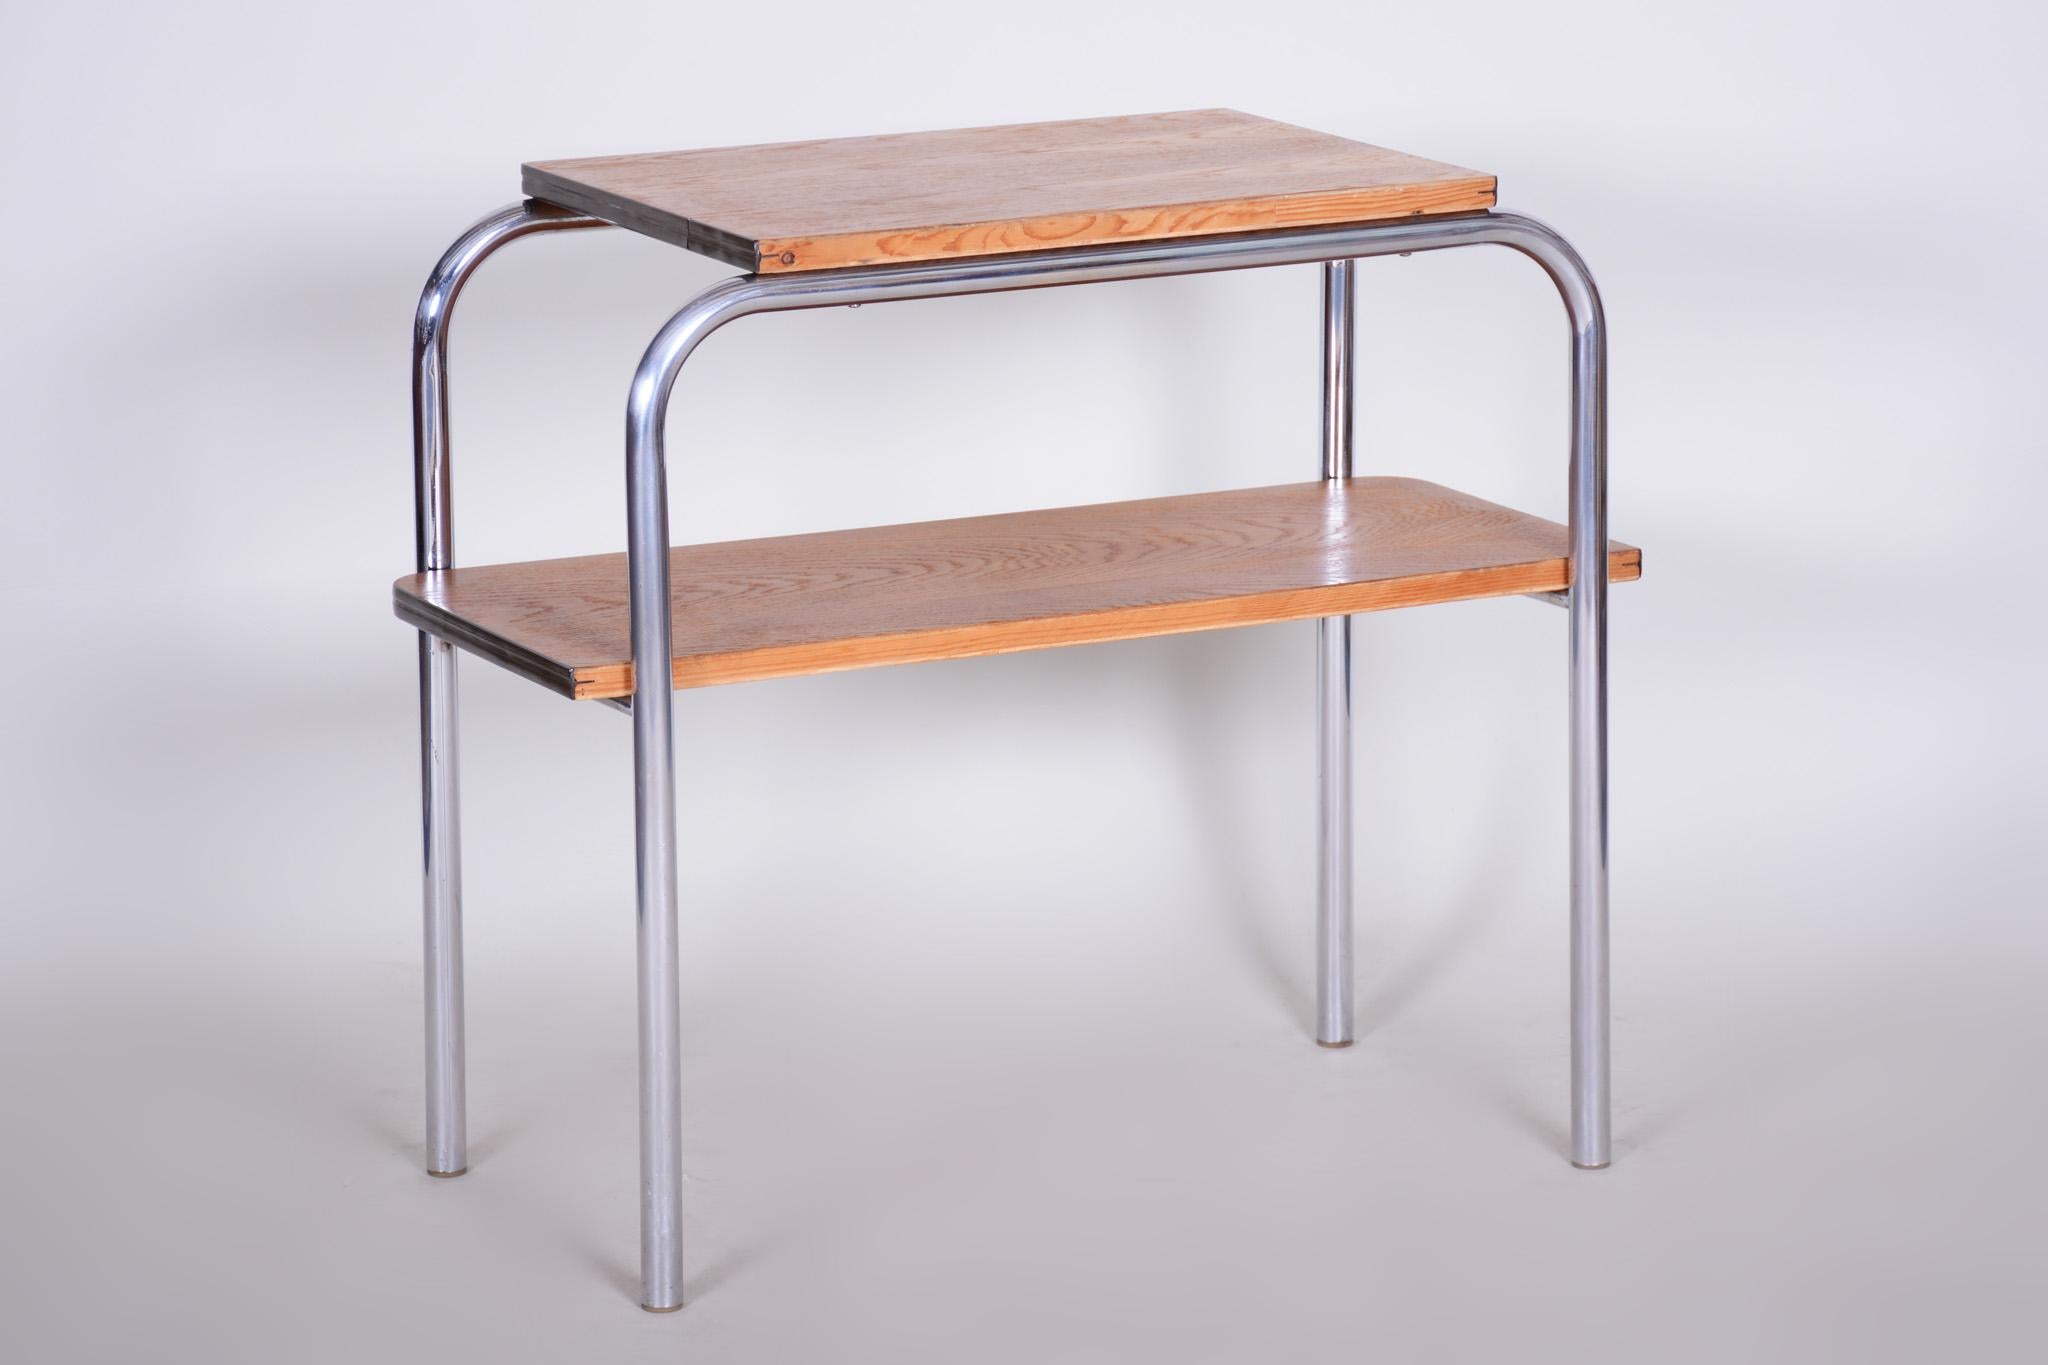 Czech Restored Oak Chromed Steel Bauhaus Side-Table, Hynek Gottwald, 1930s For Sale 3